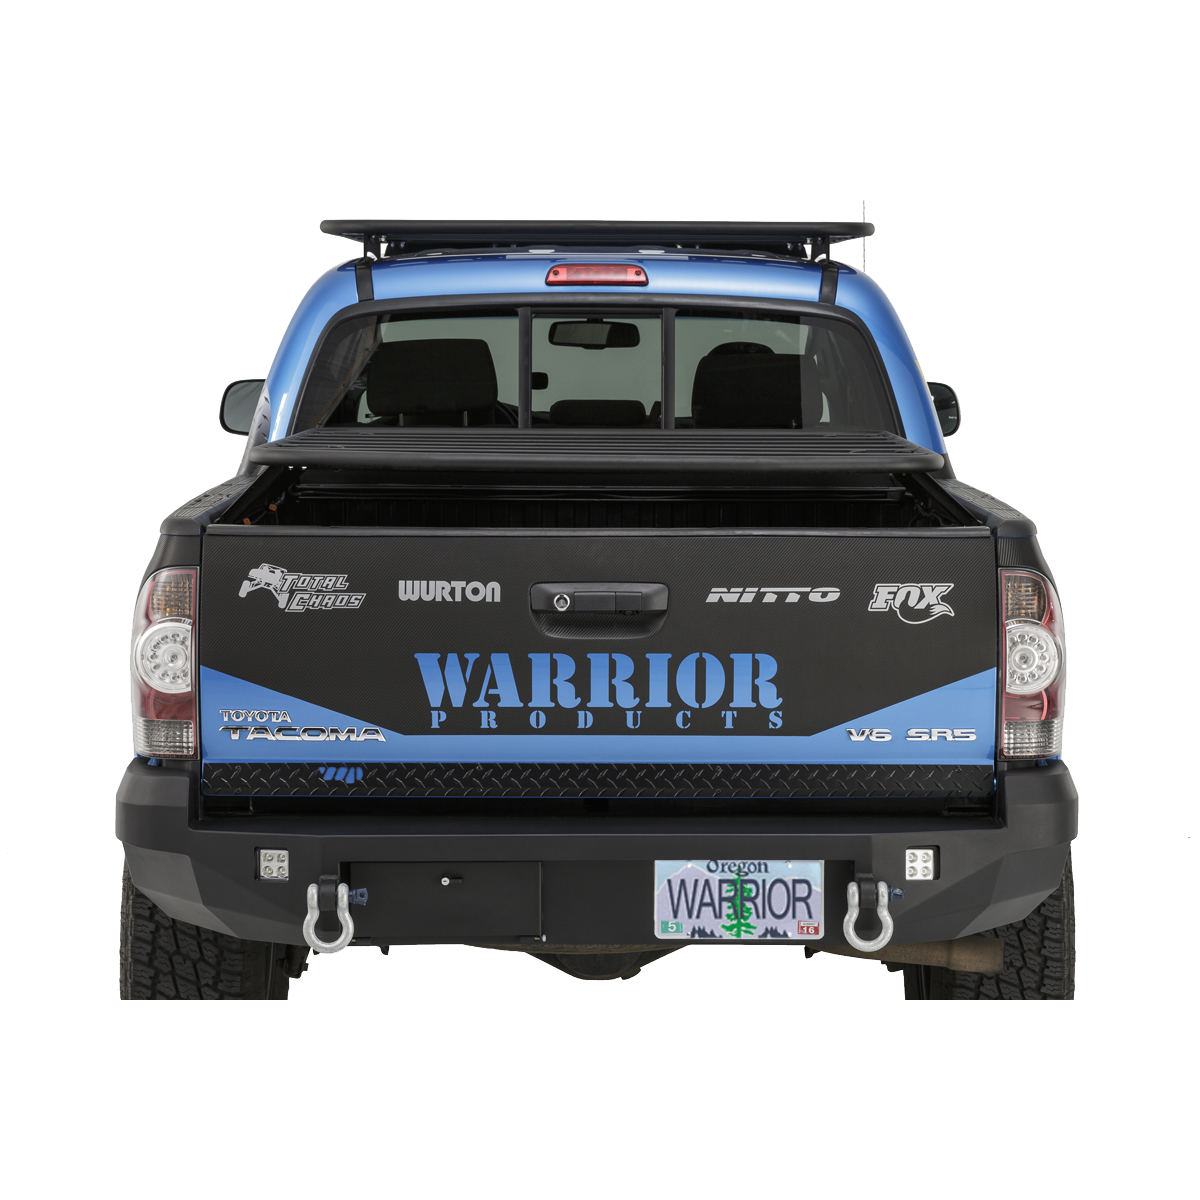 Warrior Products Toyota Tacoma Platform Bed Rack (2005-2020 Tacoma)